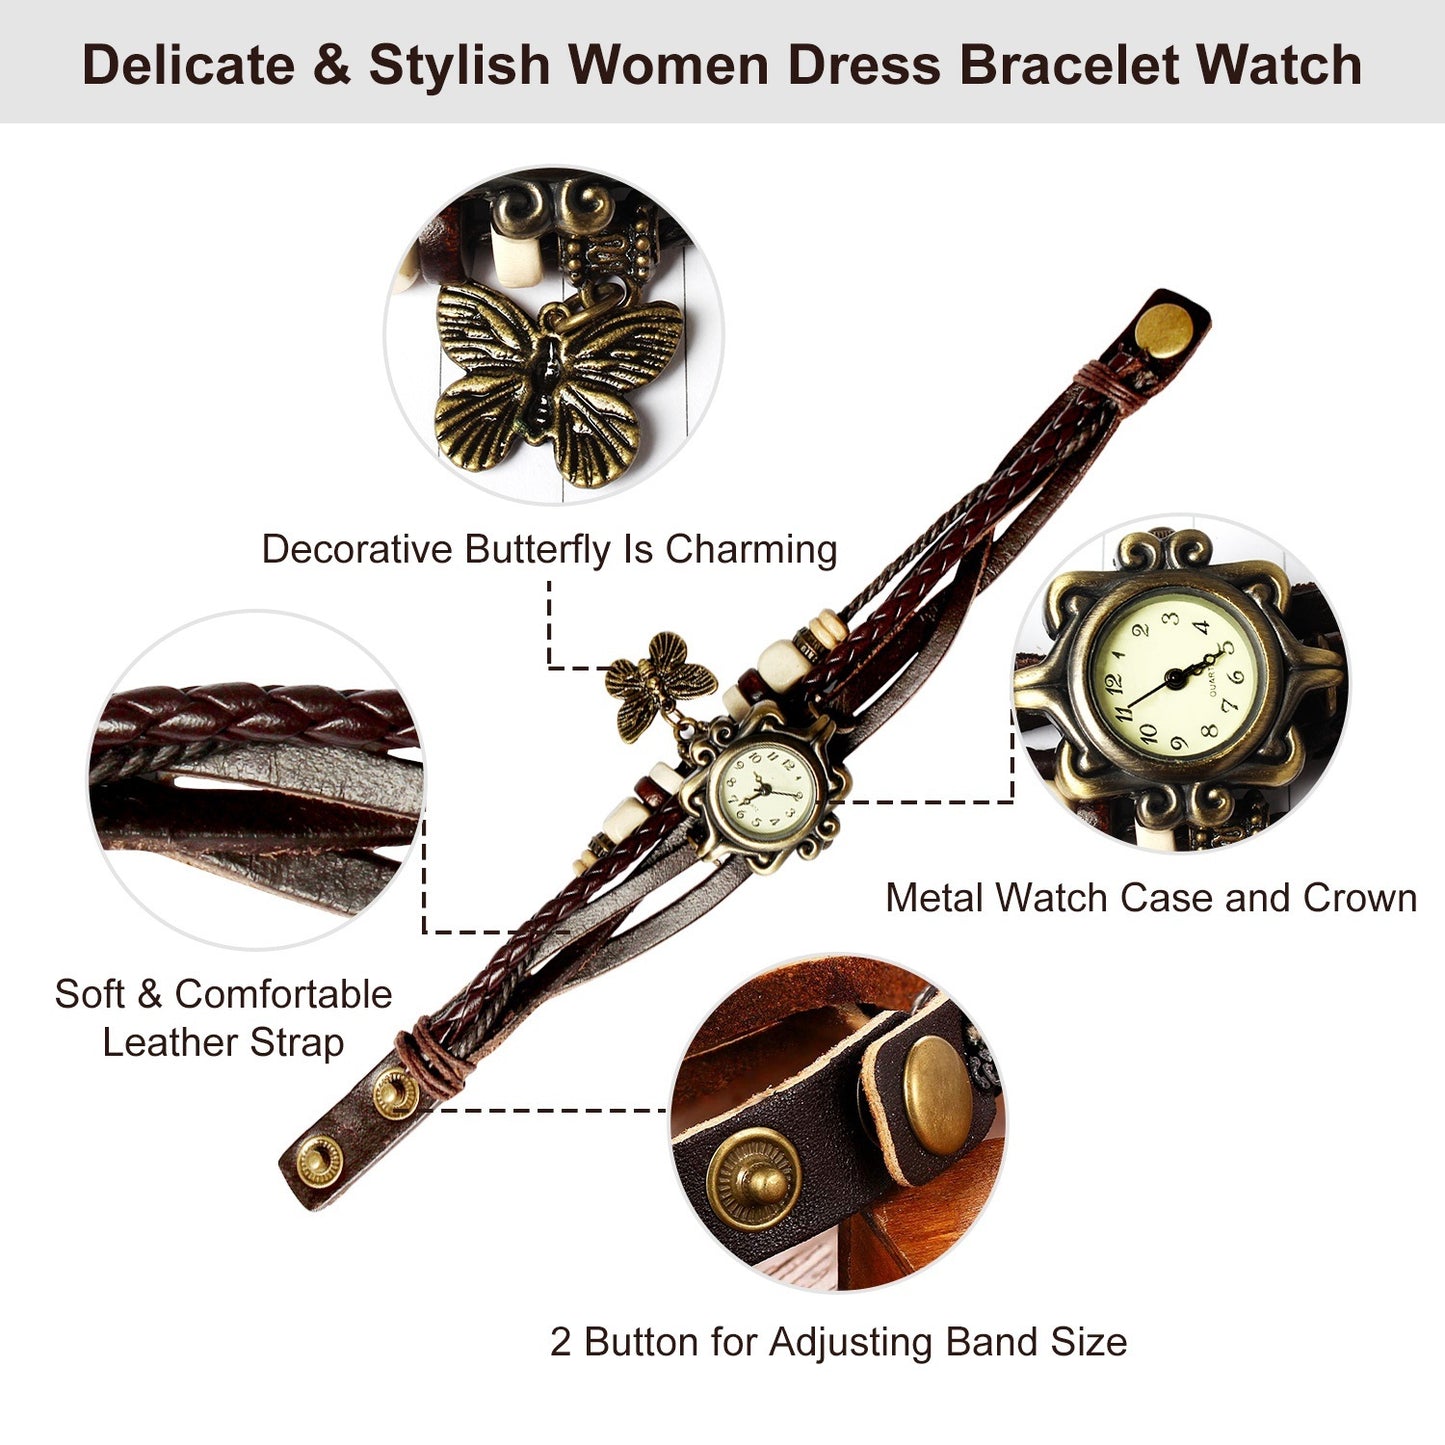 Vintage Women's Watch Bohemian Handmade Leather Watch Quartz Wrist Watch Fashion